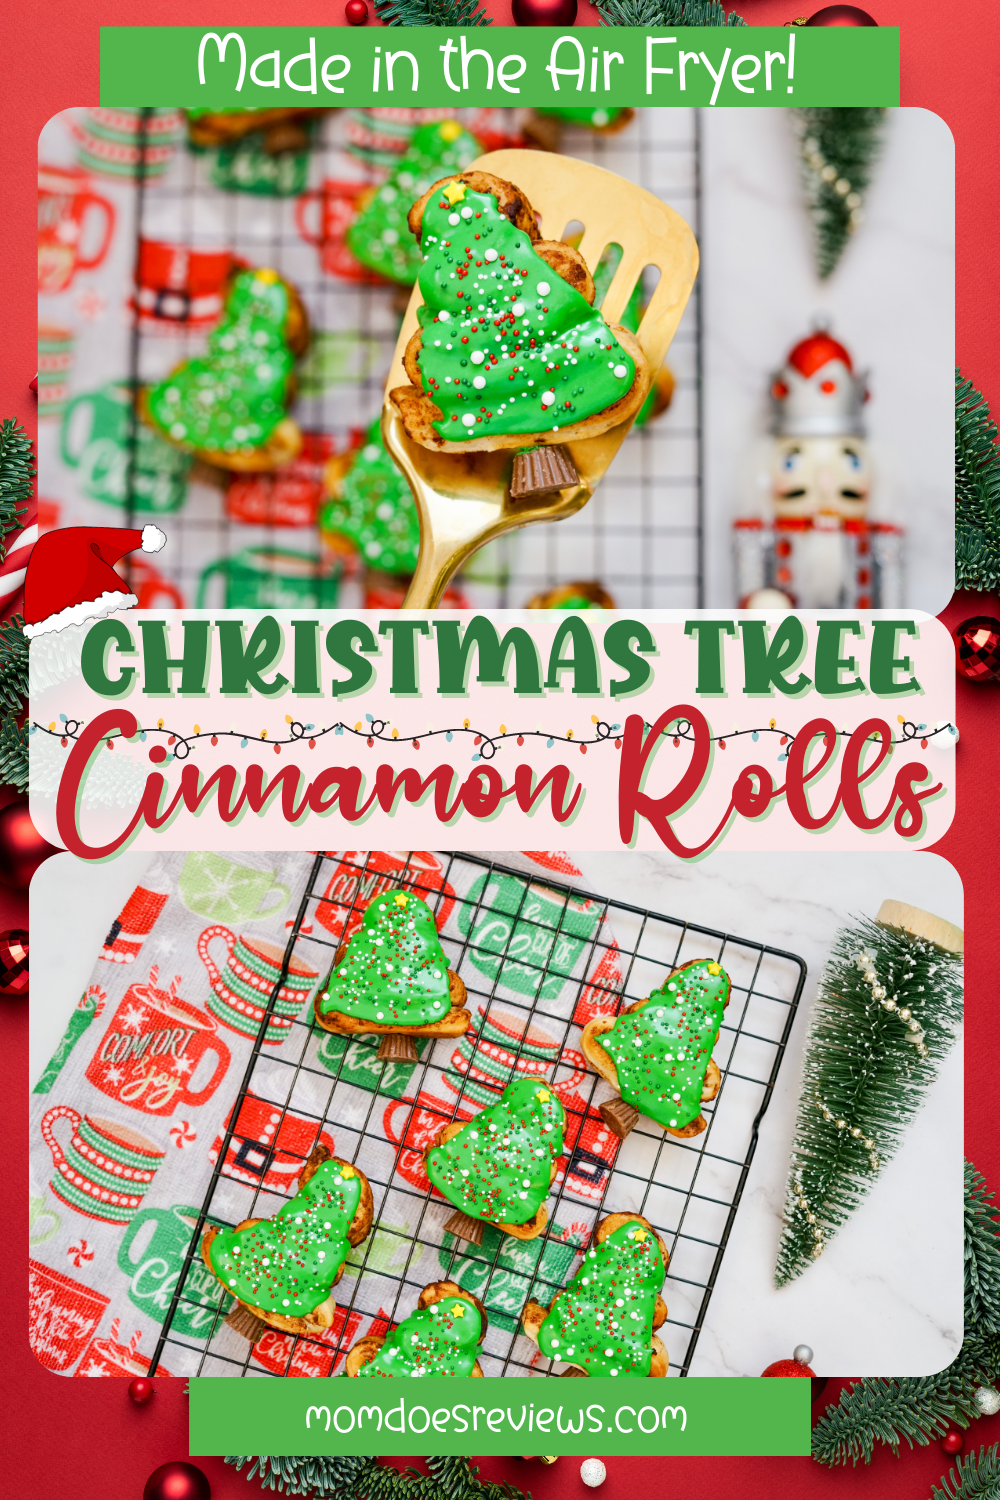 Air Fryer Christmas Tree Cinnamon Rolls recipe